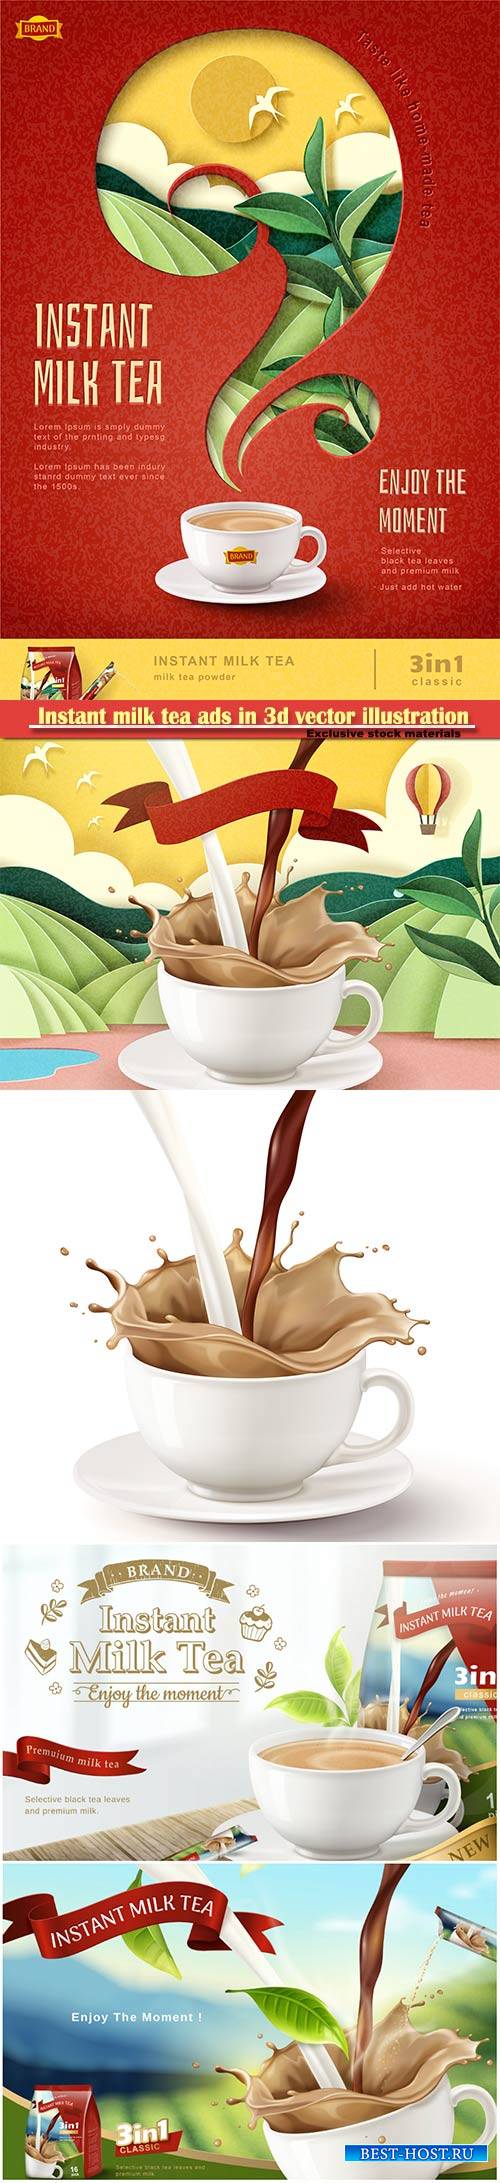 Instant milk tea ads in 3d vector illustration